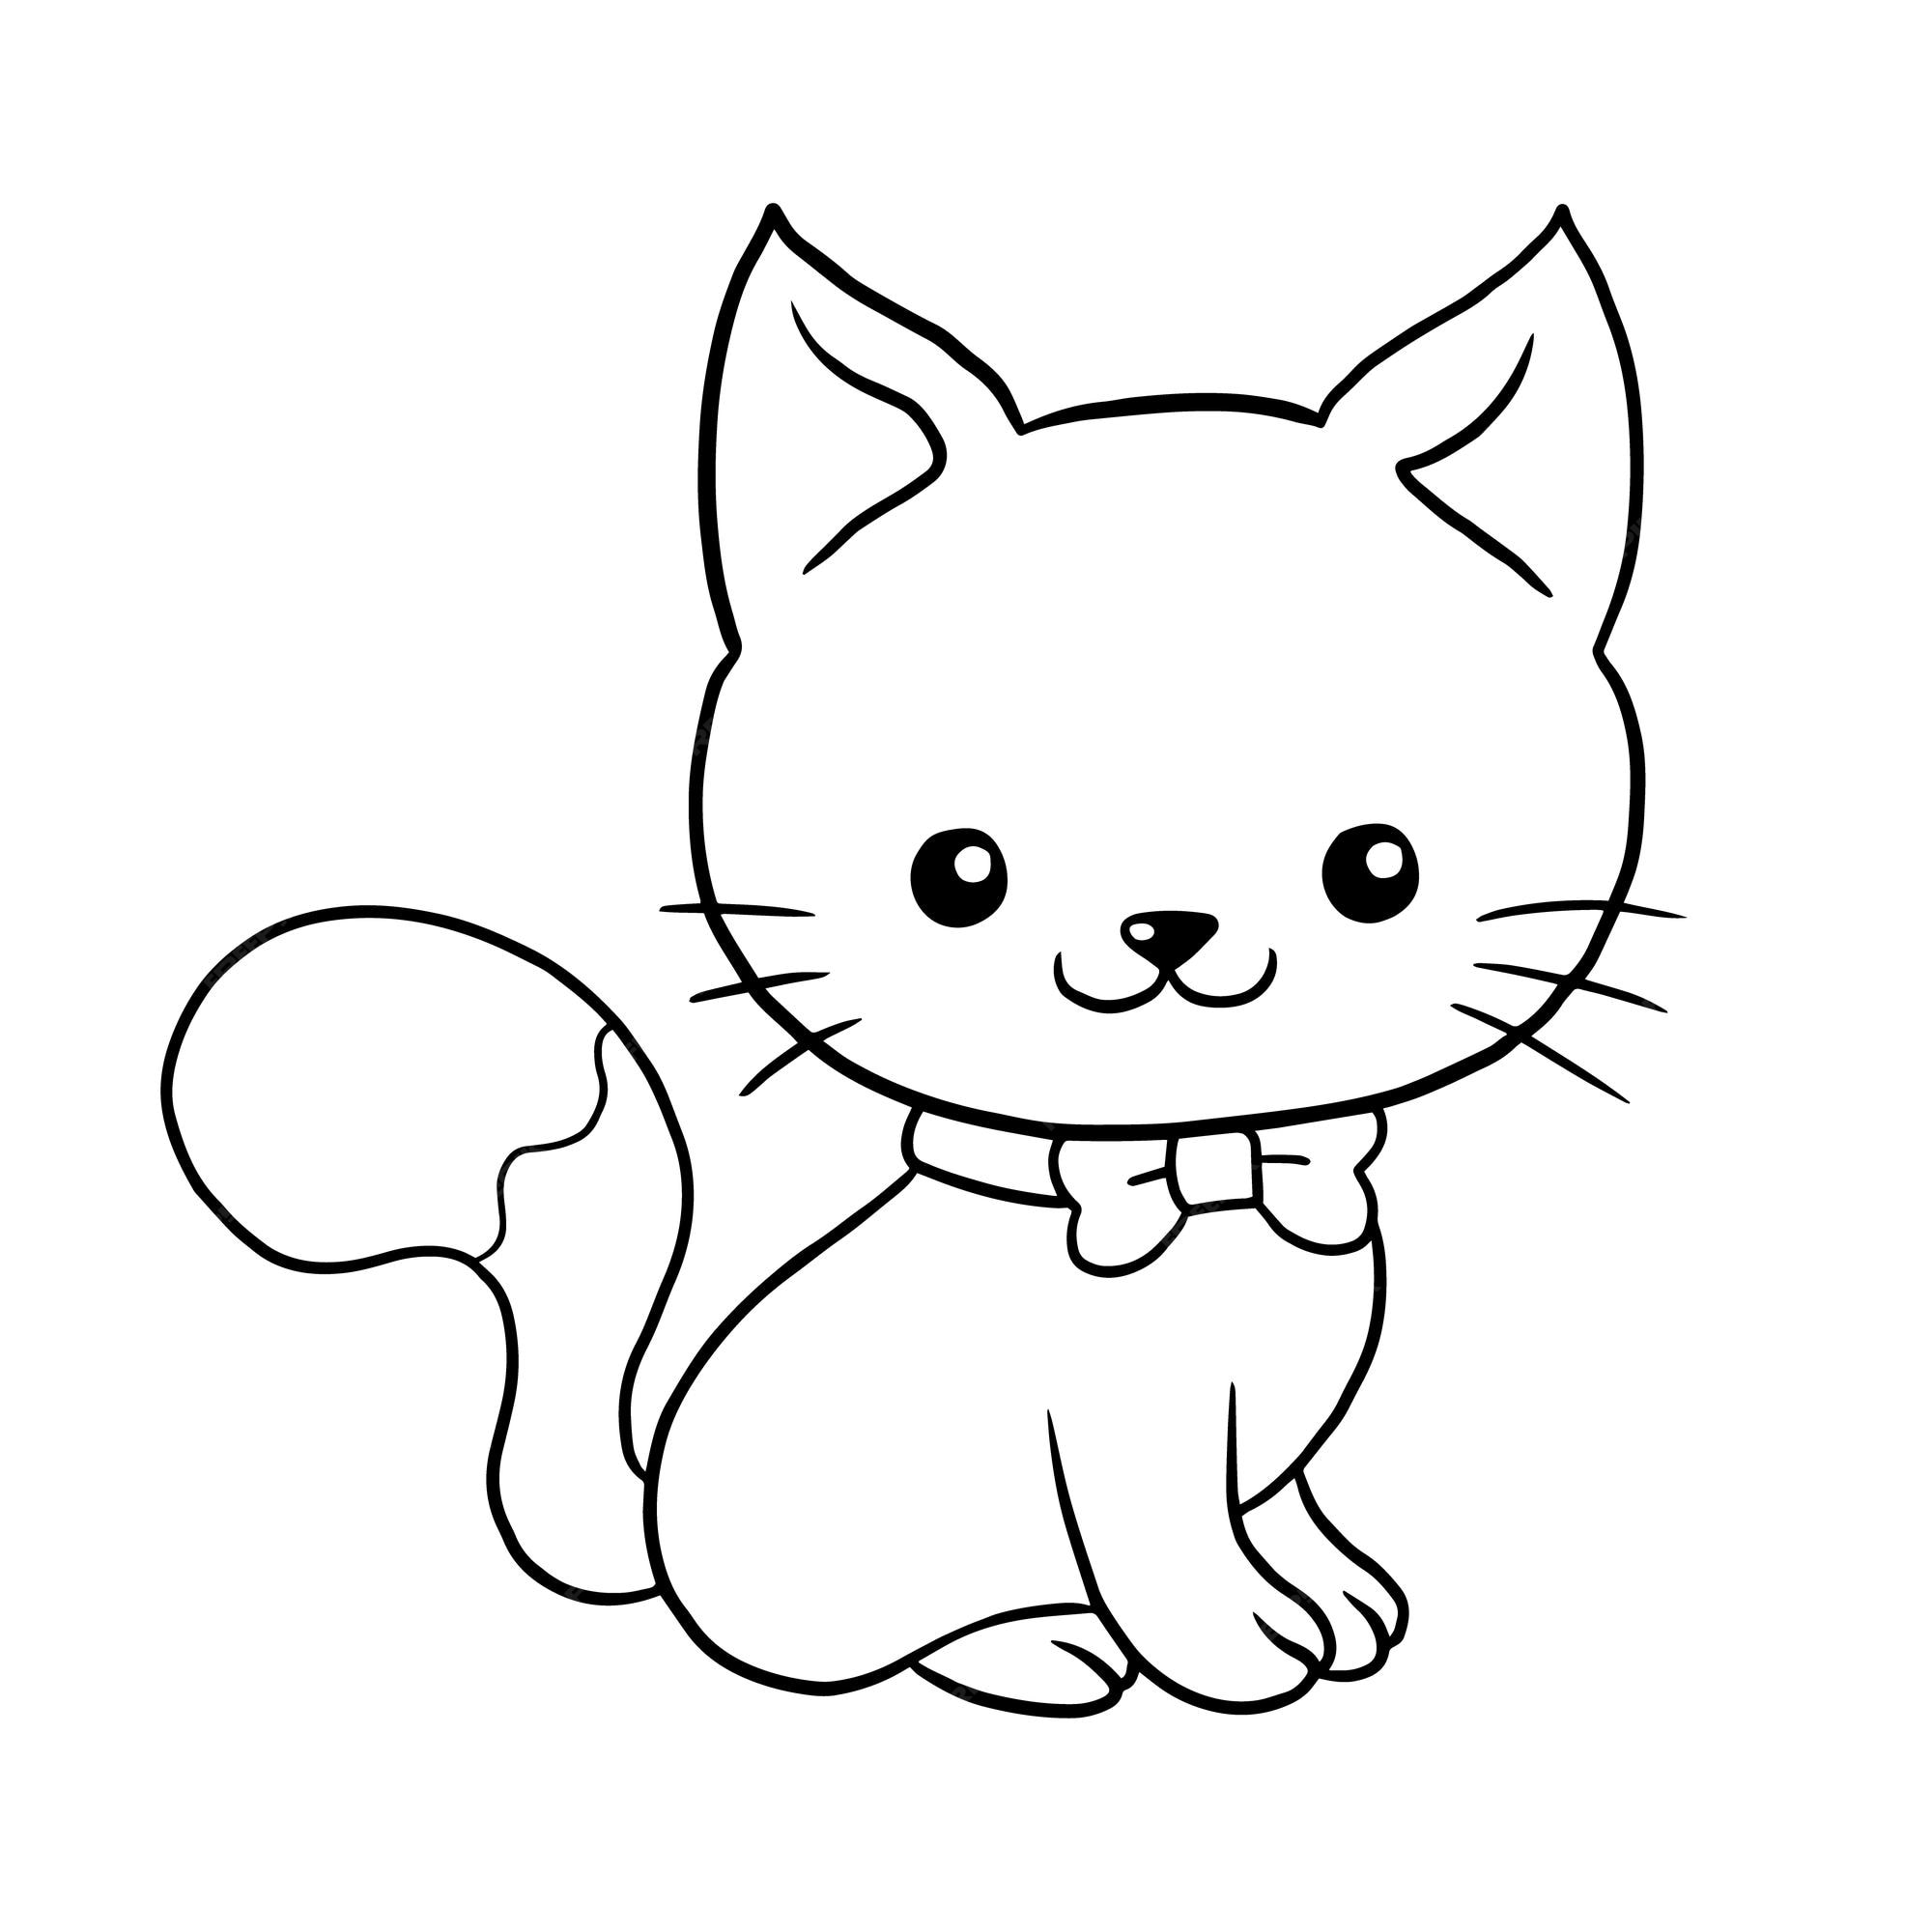 Desenho de página para colorir de rabisco kawaii bonito animal de desenho  de gato | Vetor Premium